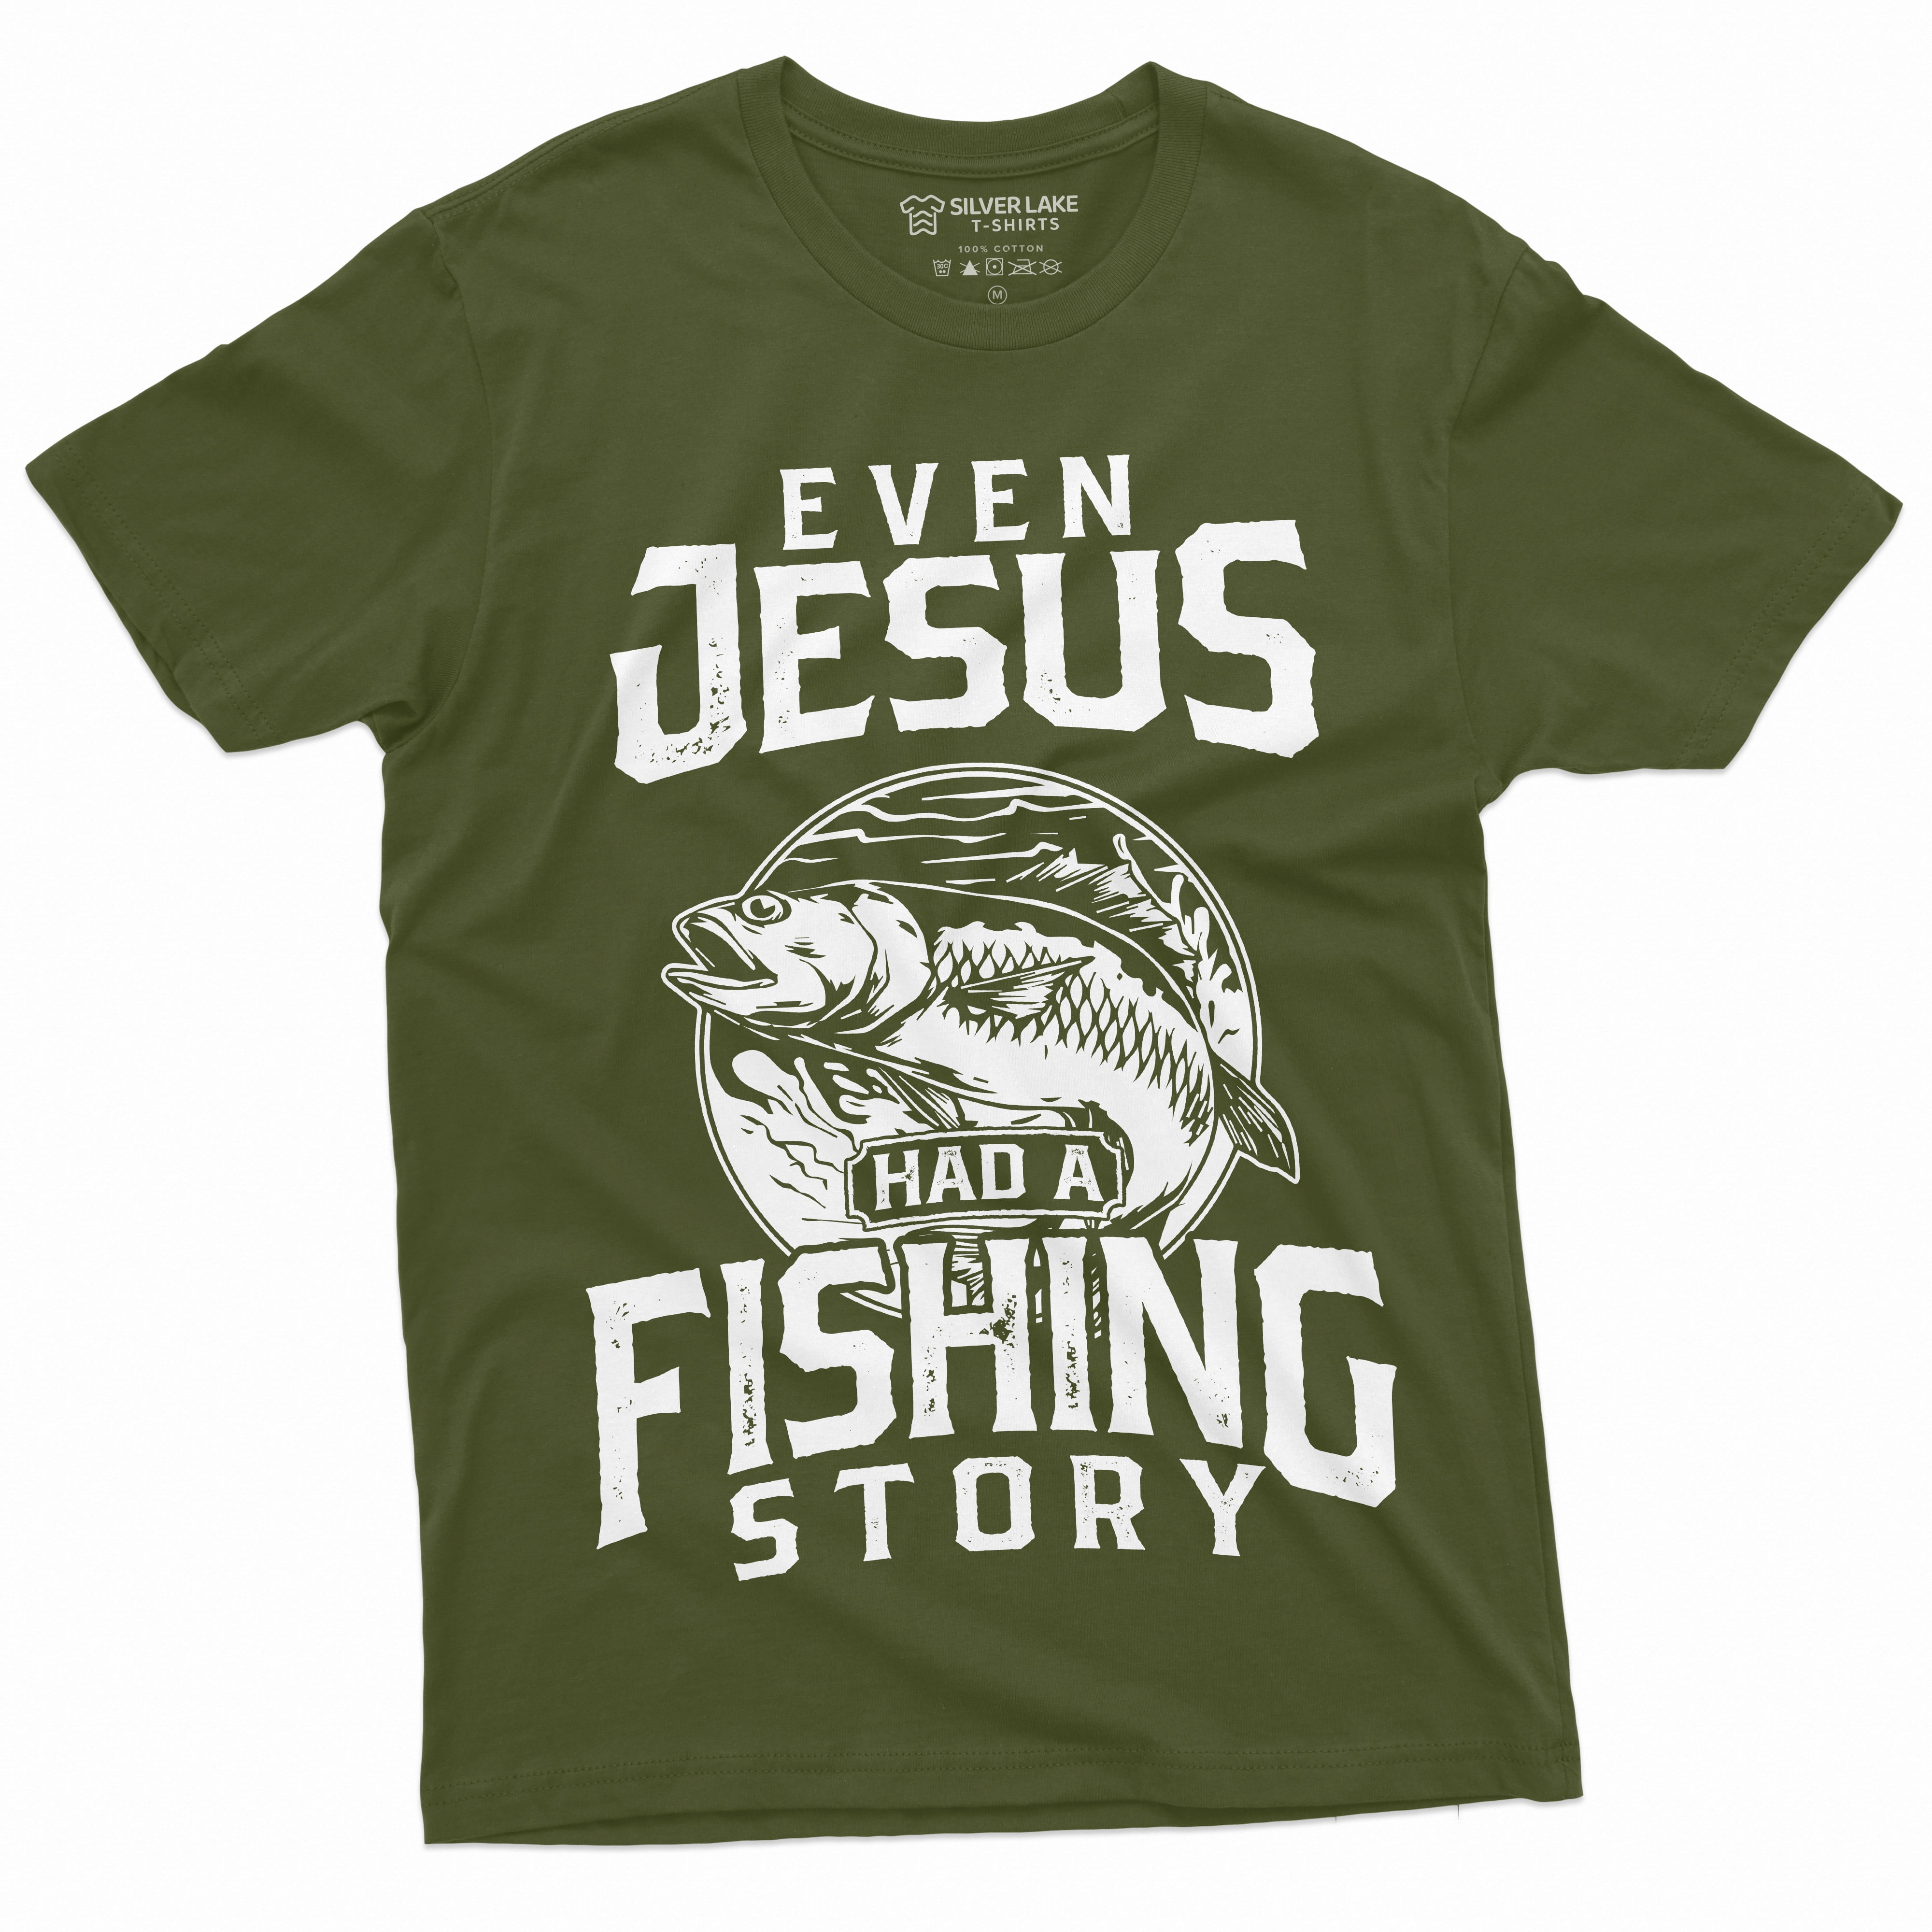 Men's Personalized Fishing T Shirt Salmon Fishing Shirts Custom T Shirt Salmon Fishing Shirt Vintage Tee